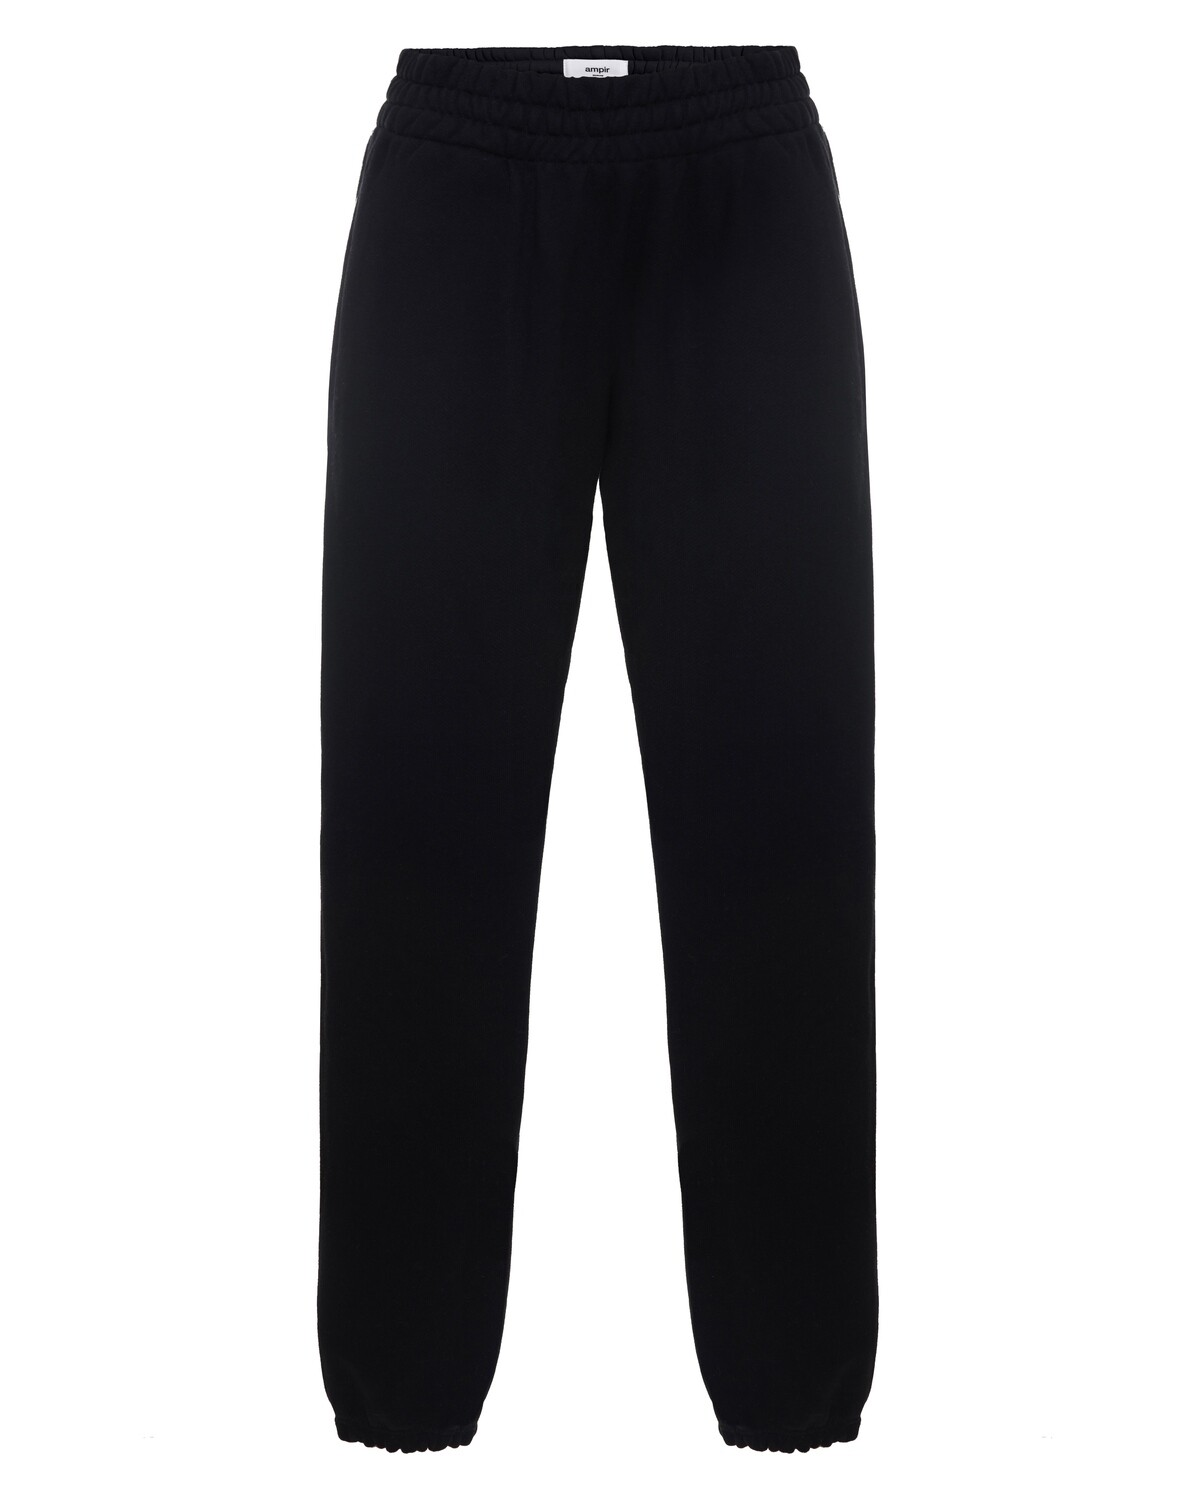 Unisex sweatpants in Black